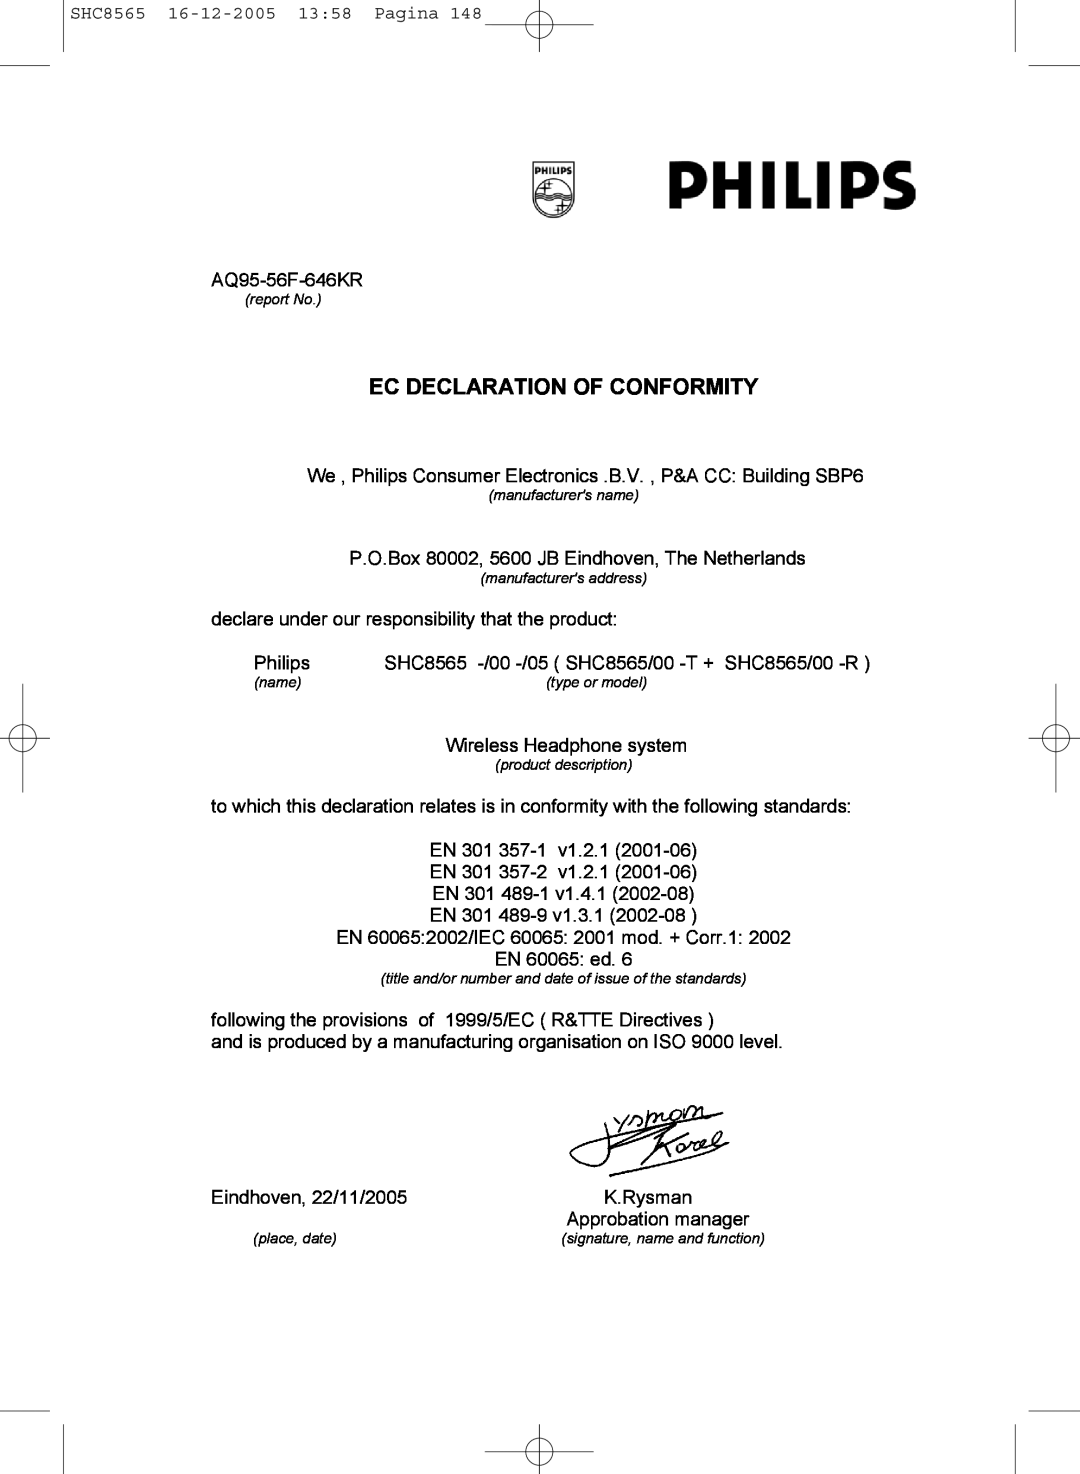 Philips SHC8565 manual Ec Declaration Of Conformity 